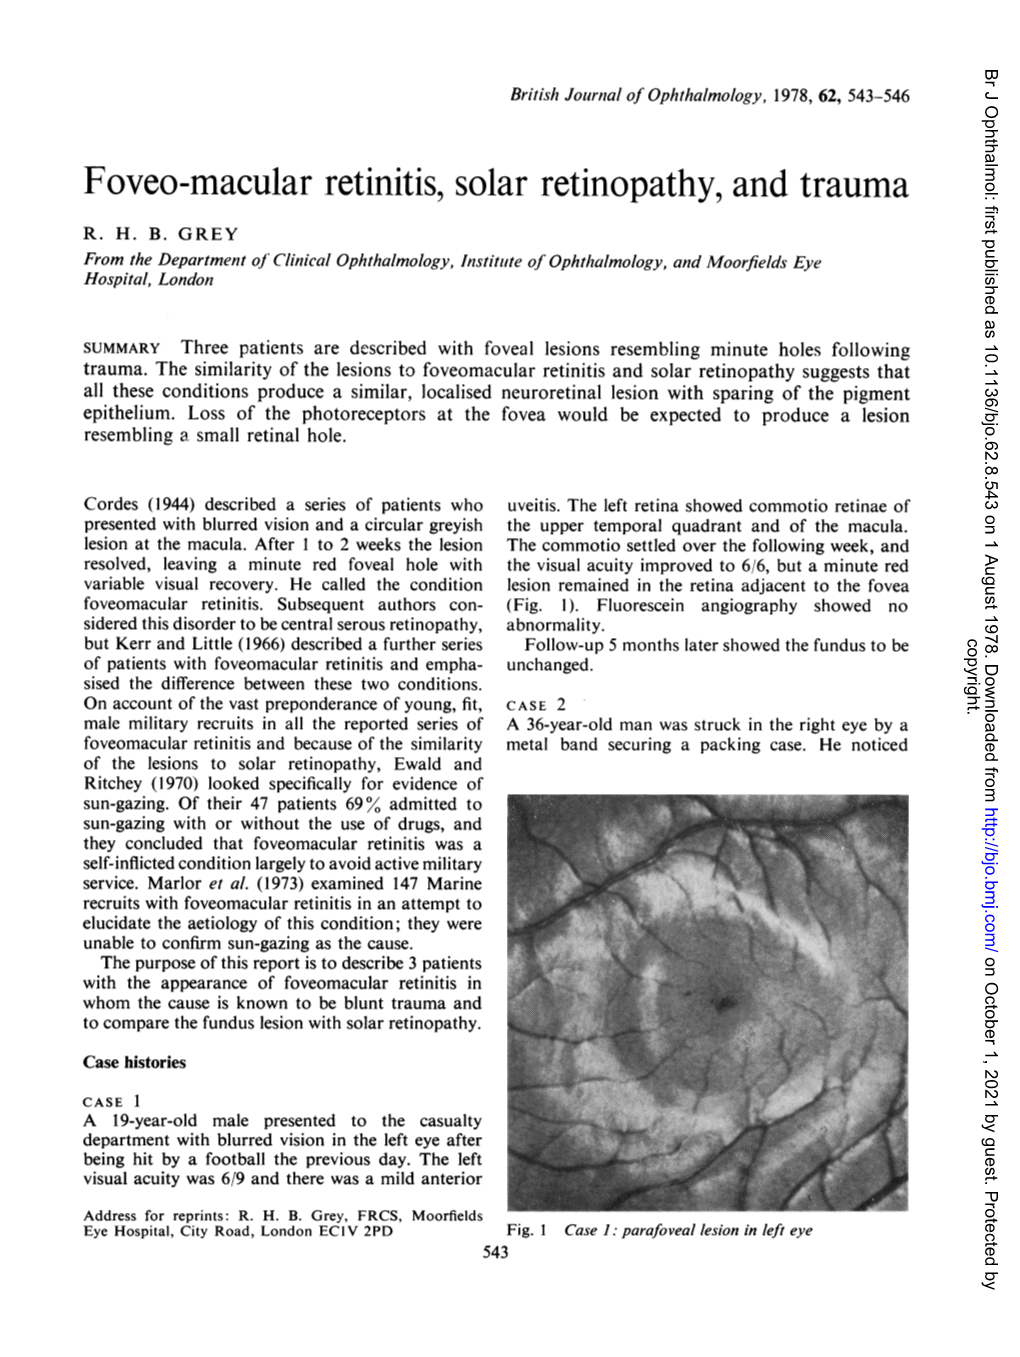 Foveo-Macular Retinitis,Solar Retinopathy, and Trauma